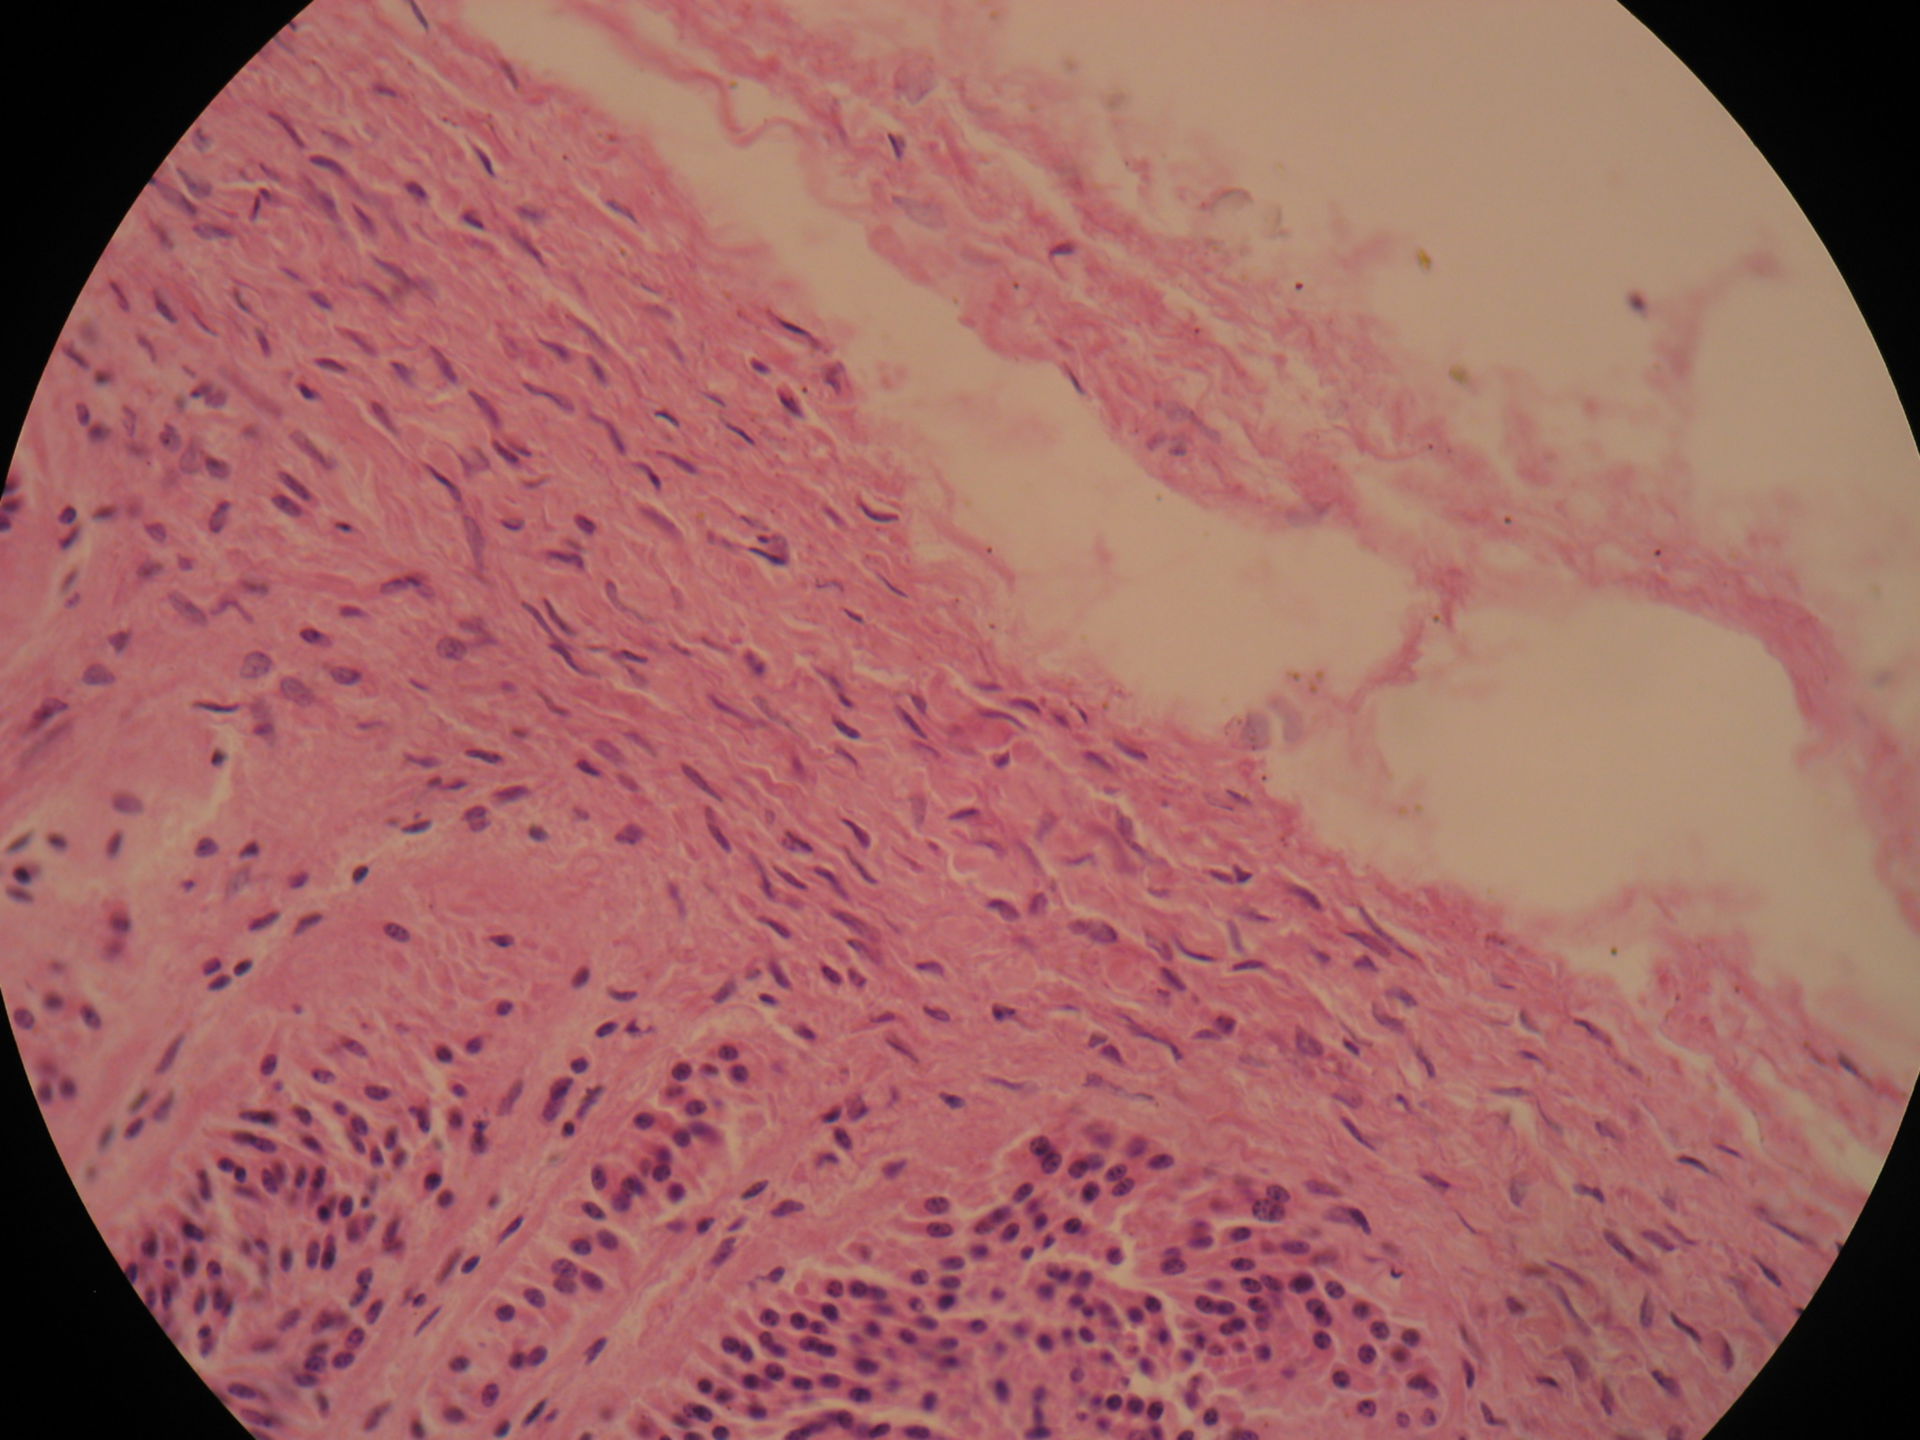 Adrenal gland of horse - fibrous capsule